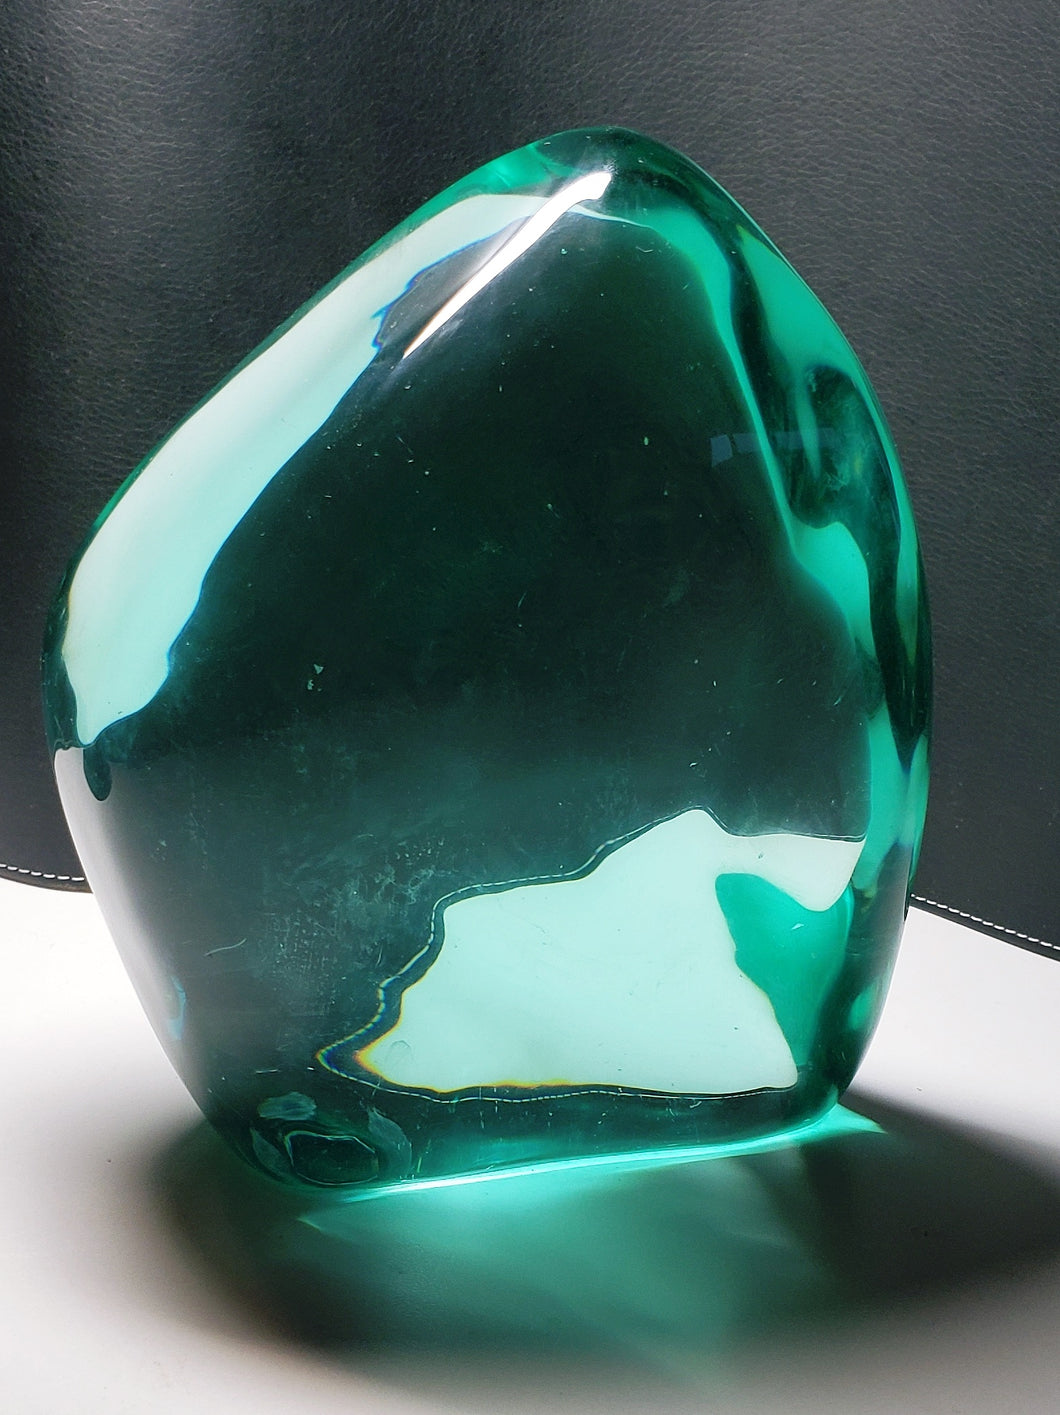 Turquoise (Cyan Angeles) Andara Crystal 4.19kg